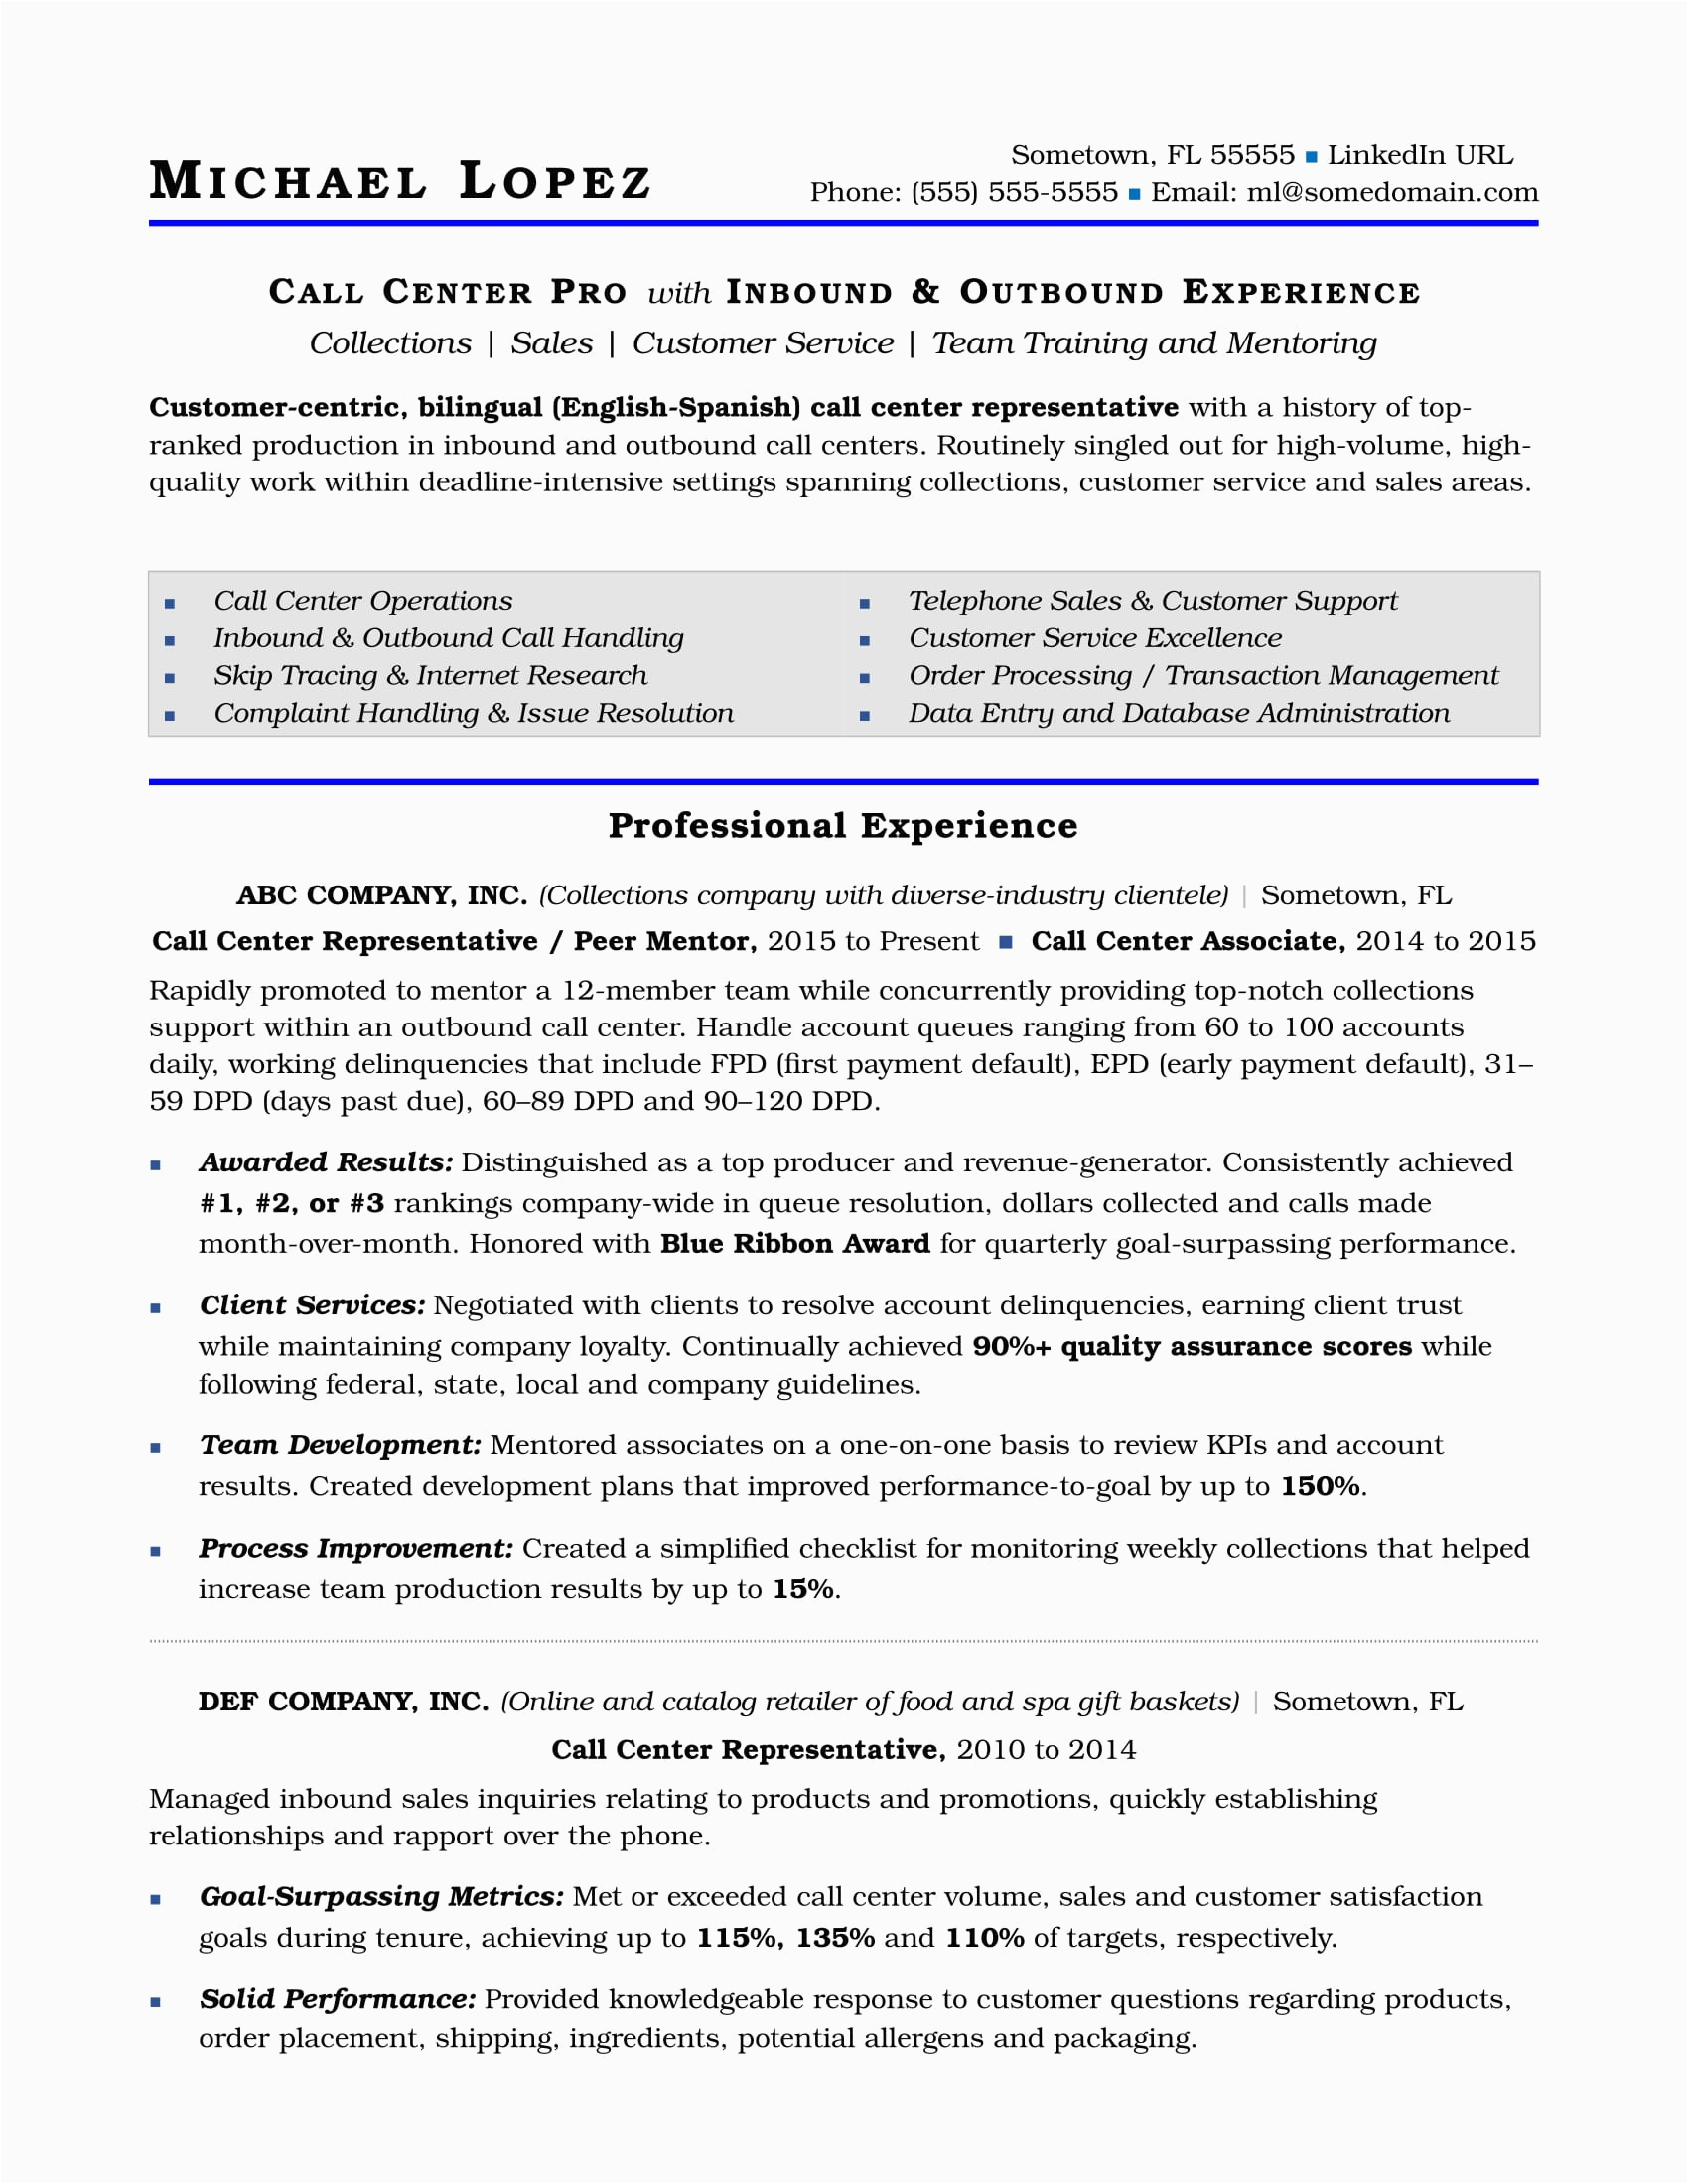 Sample Resume for Call Center Representative Call Center Resume Sample